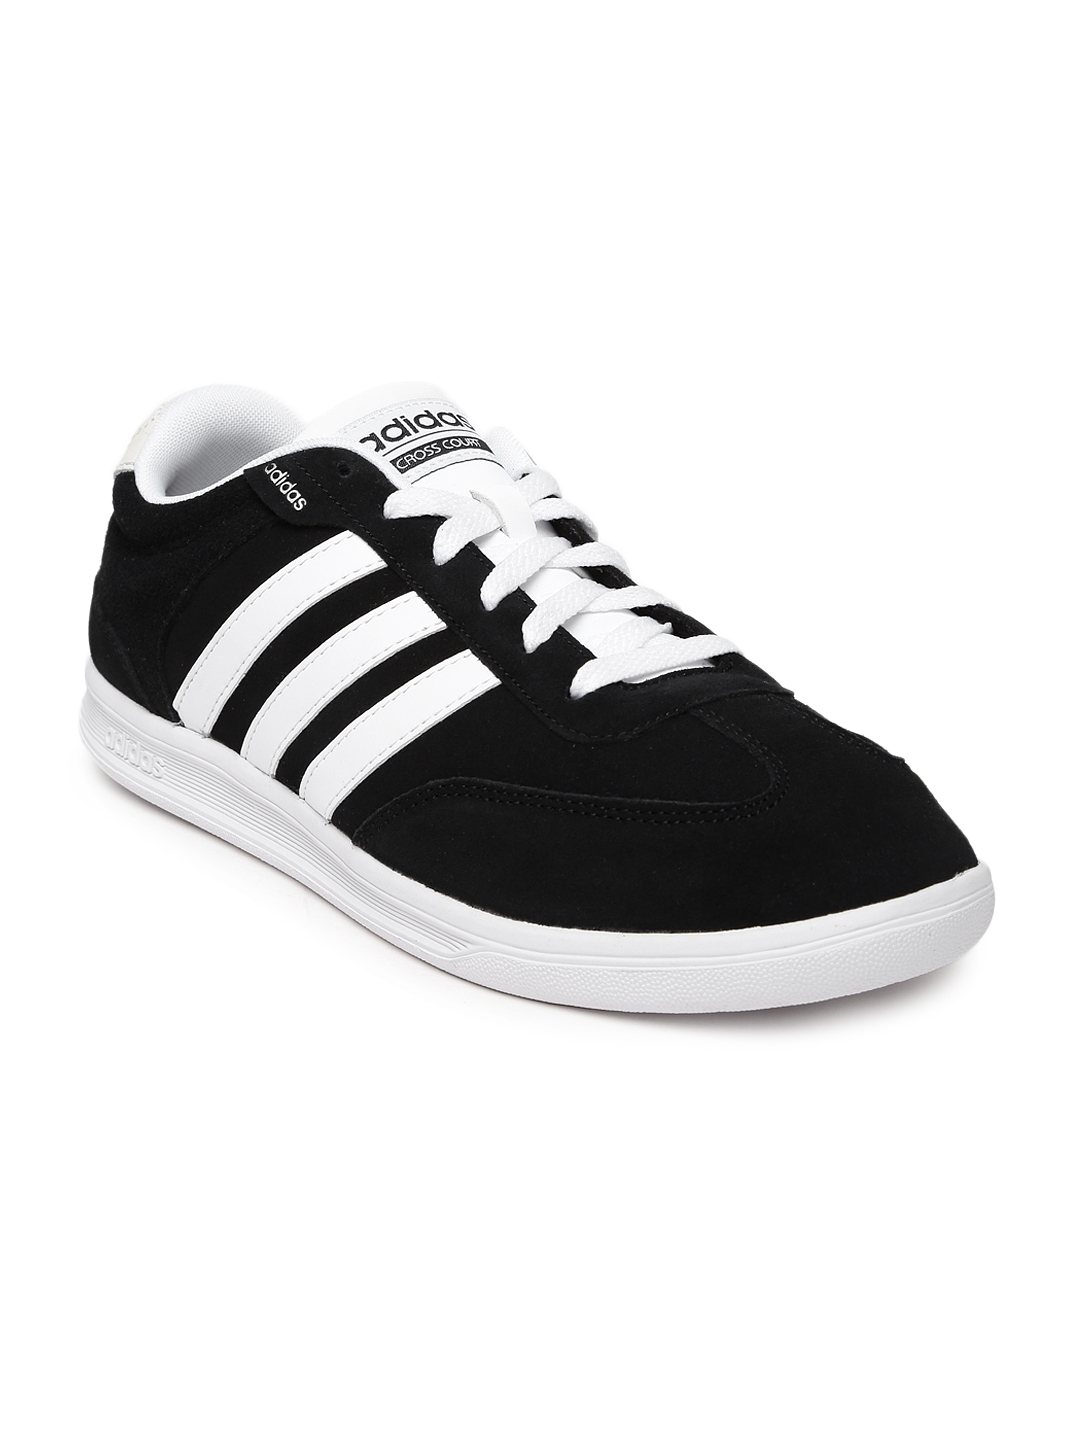 Buy ADIDAS Black Cross Court Suede Sneakers - Casual Shoes Men 1461296 | Myntra